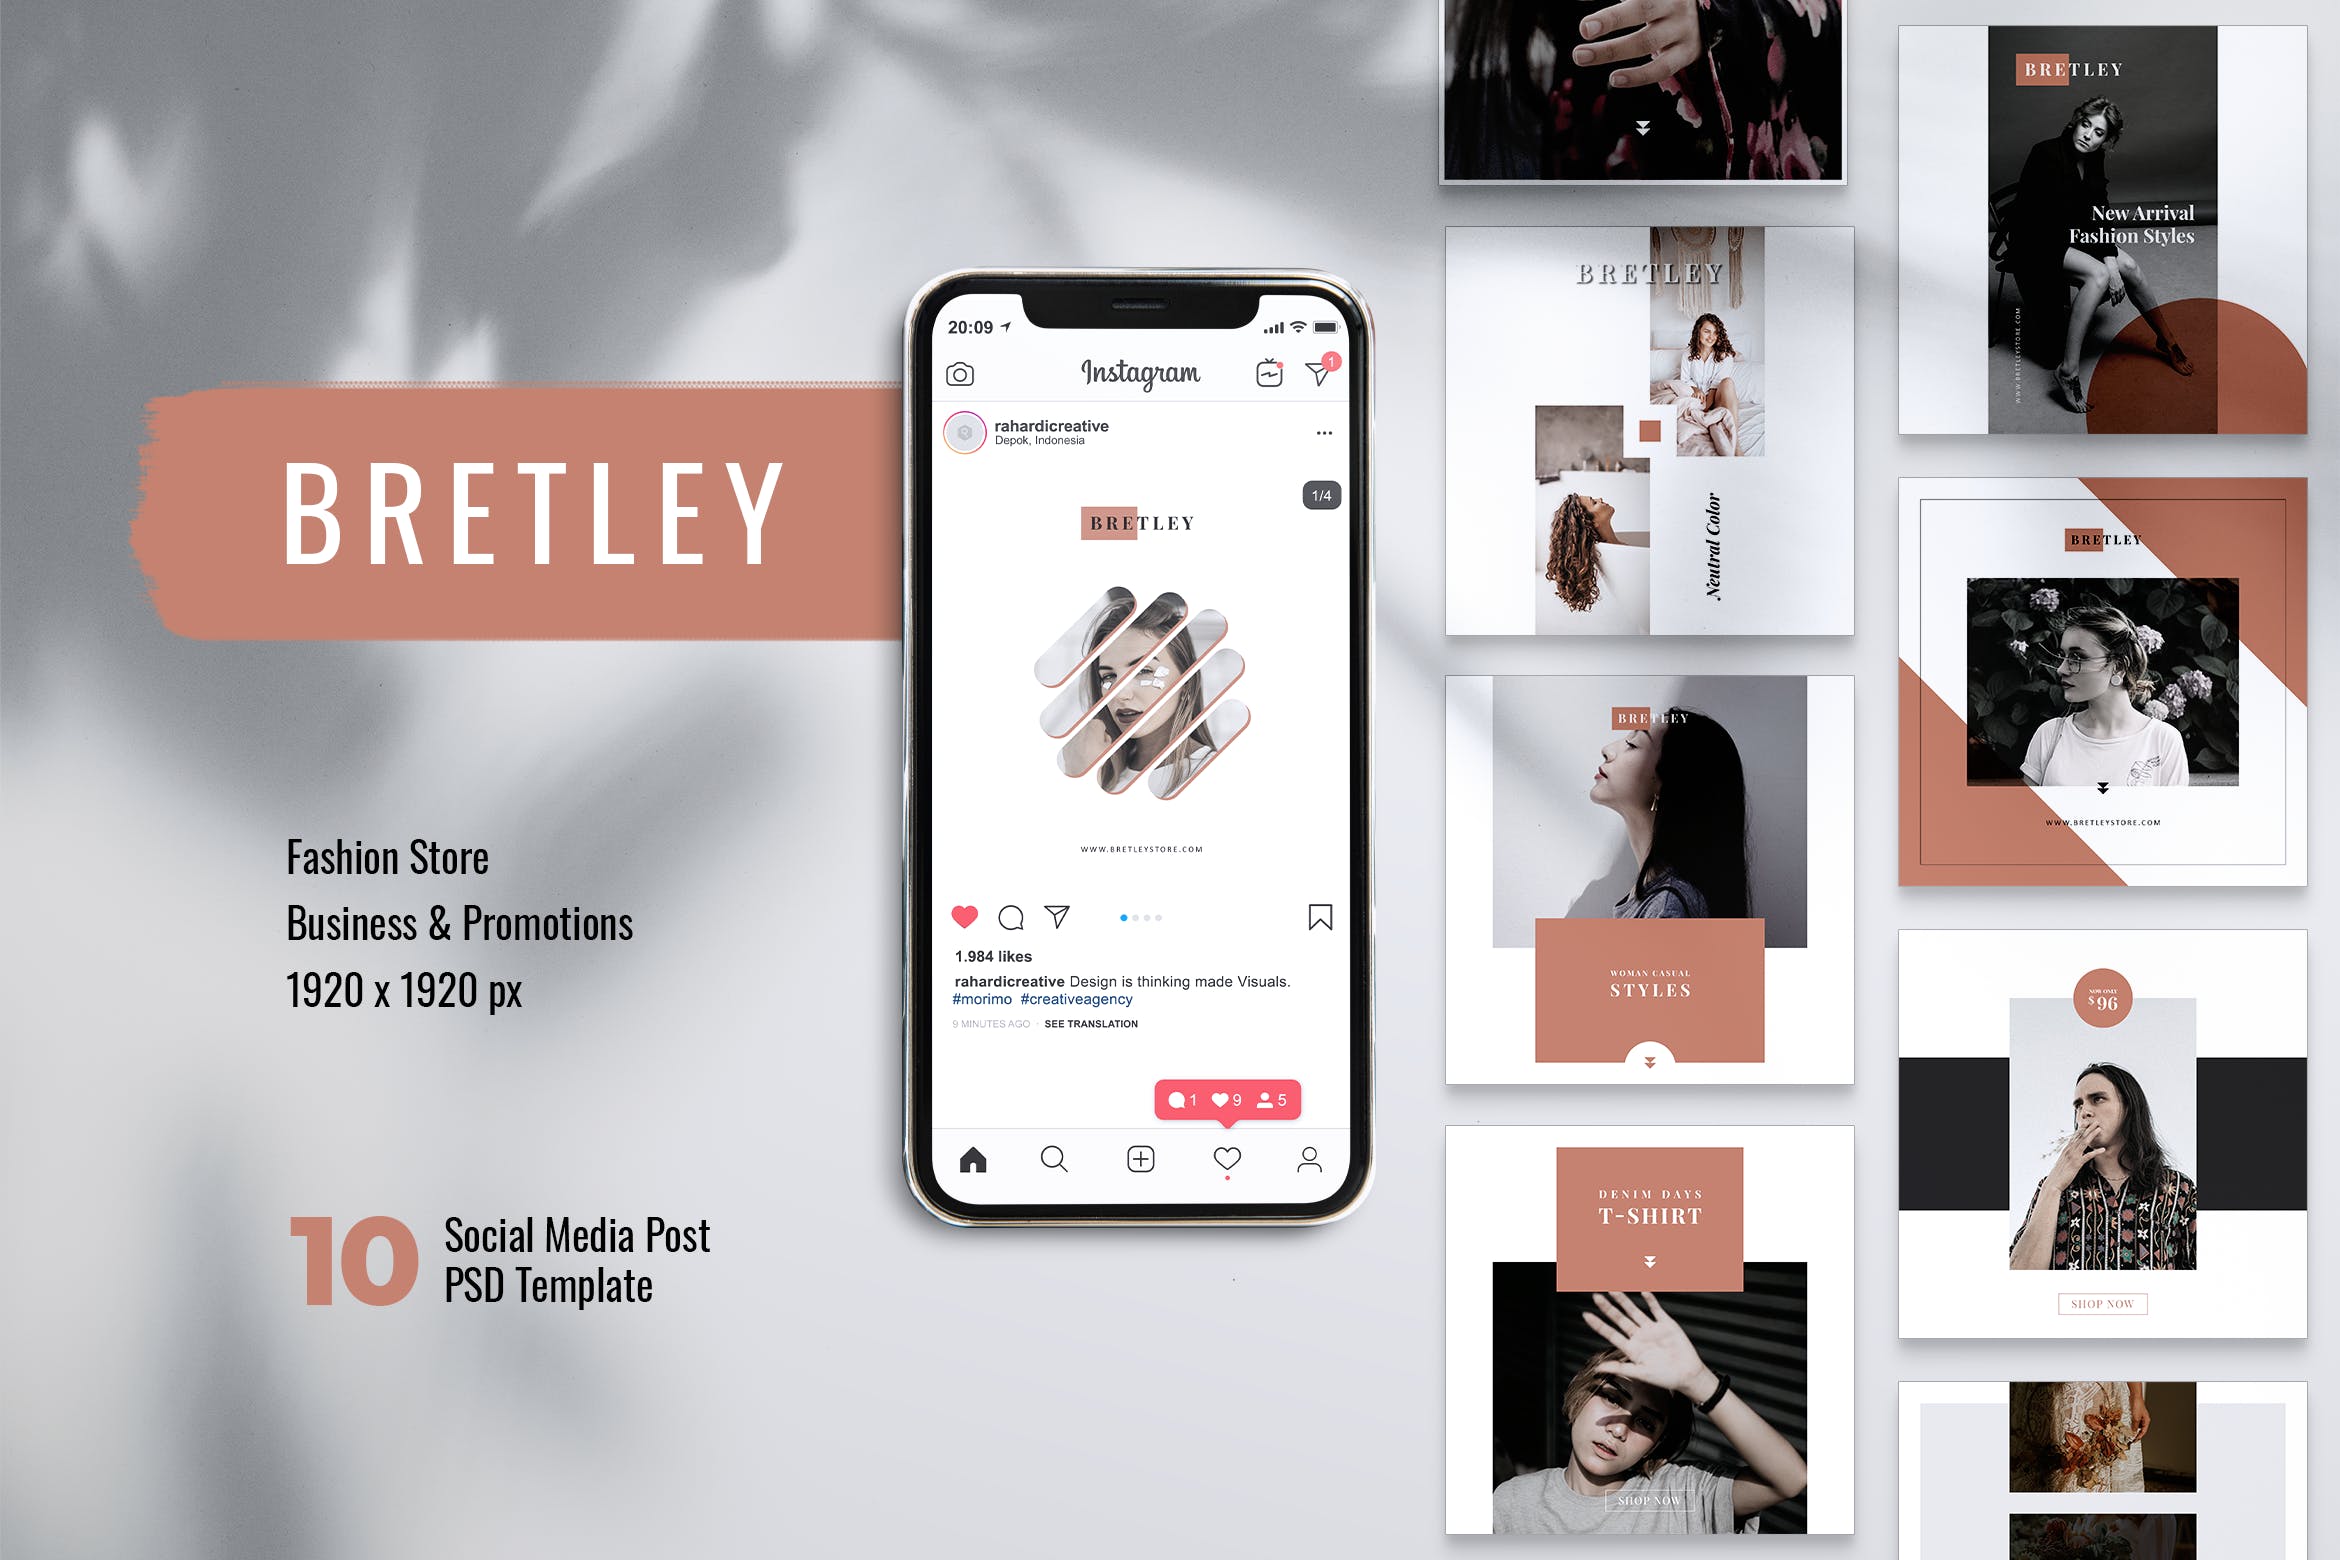 10款Instagram&Facebook社交平台时尚品牌贴图设计模板第一素材精选 BRETLEY Fashion Store Instagram & Facebook Post插图